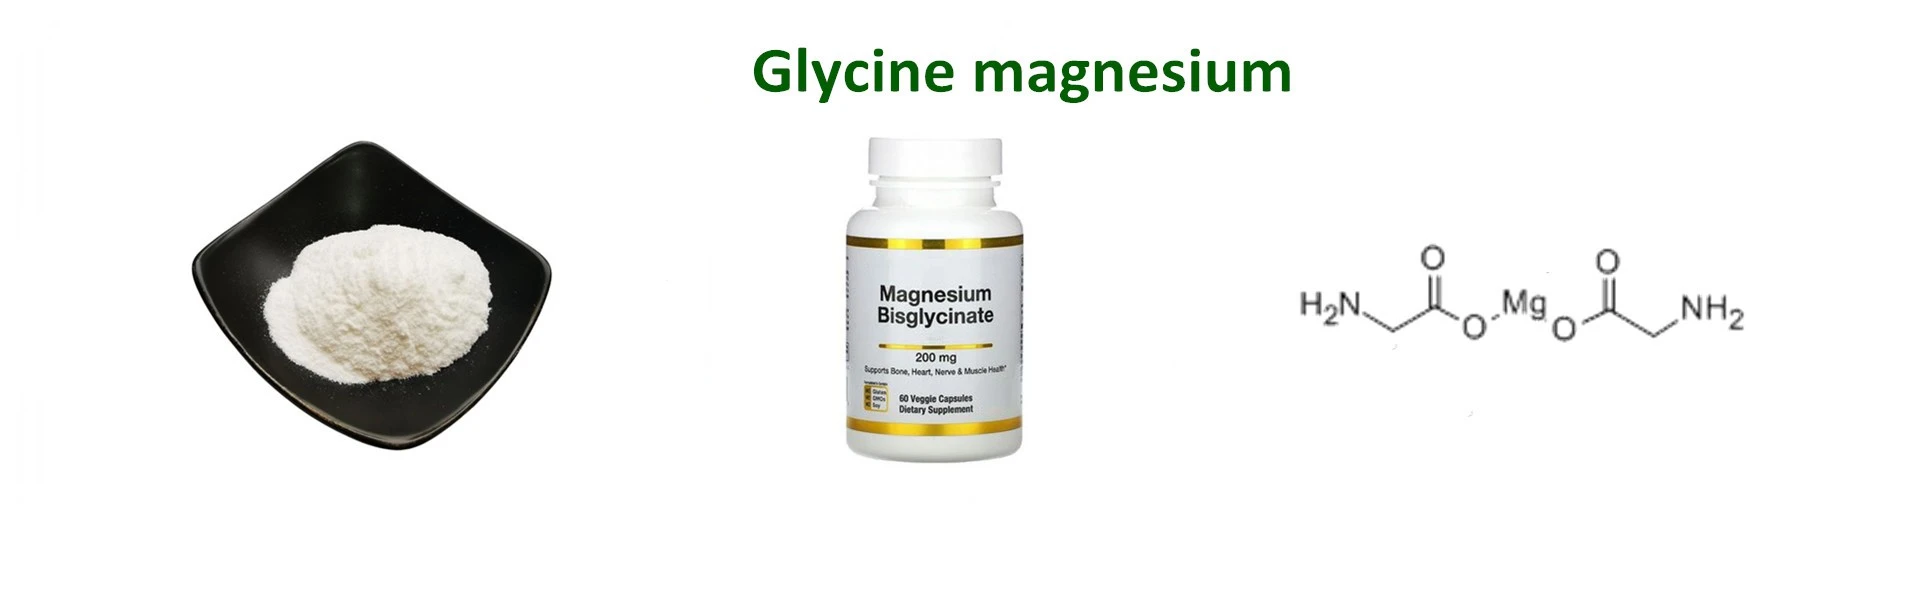 Glycine magnesium